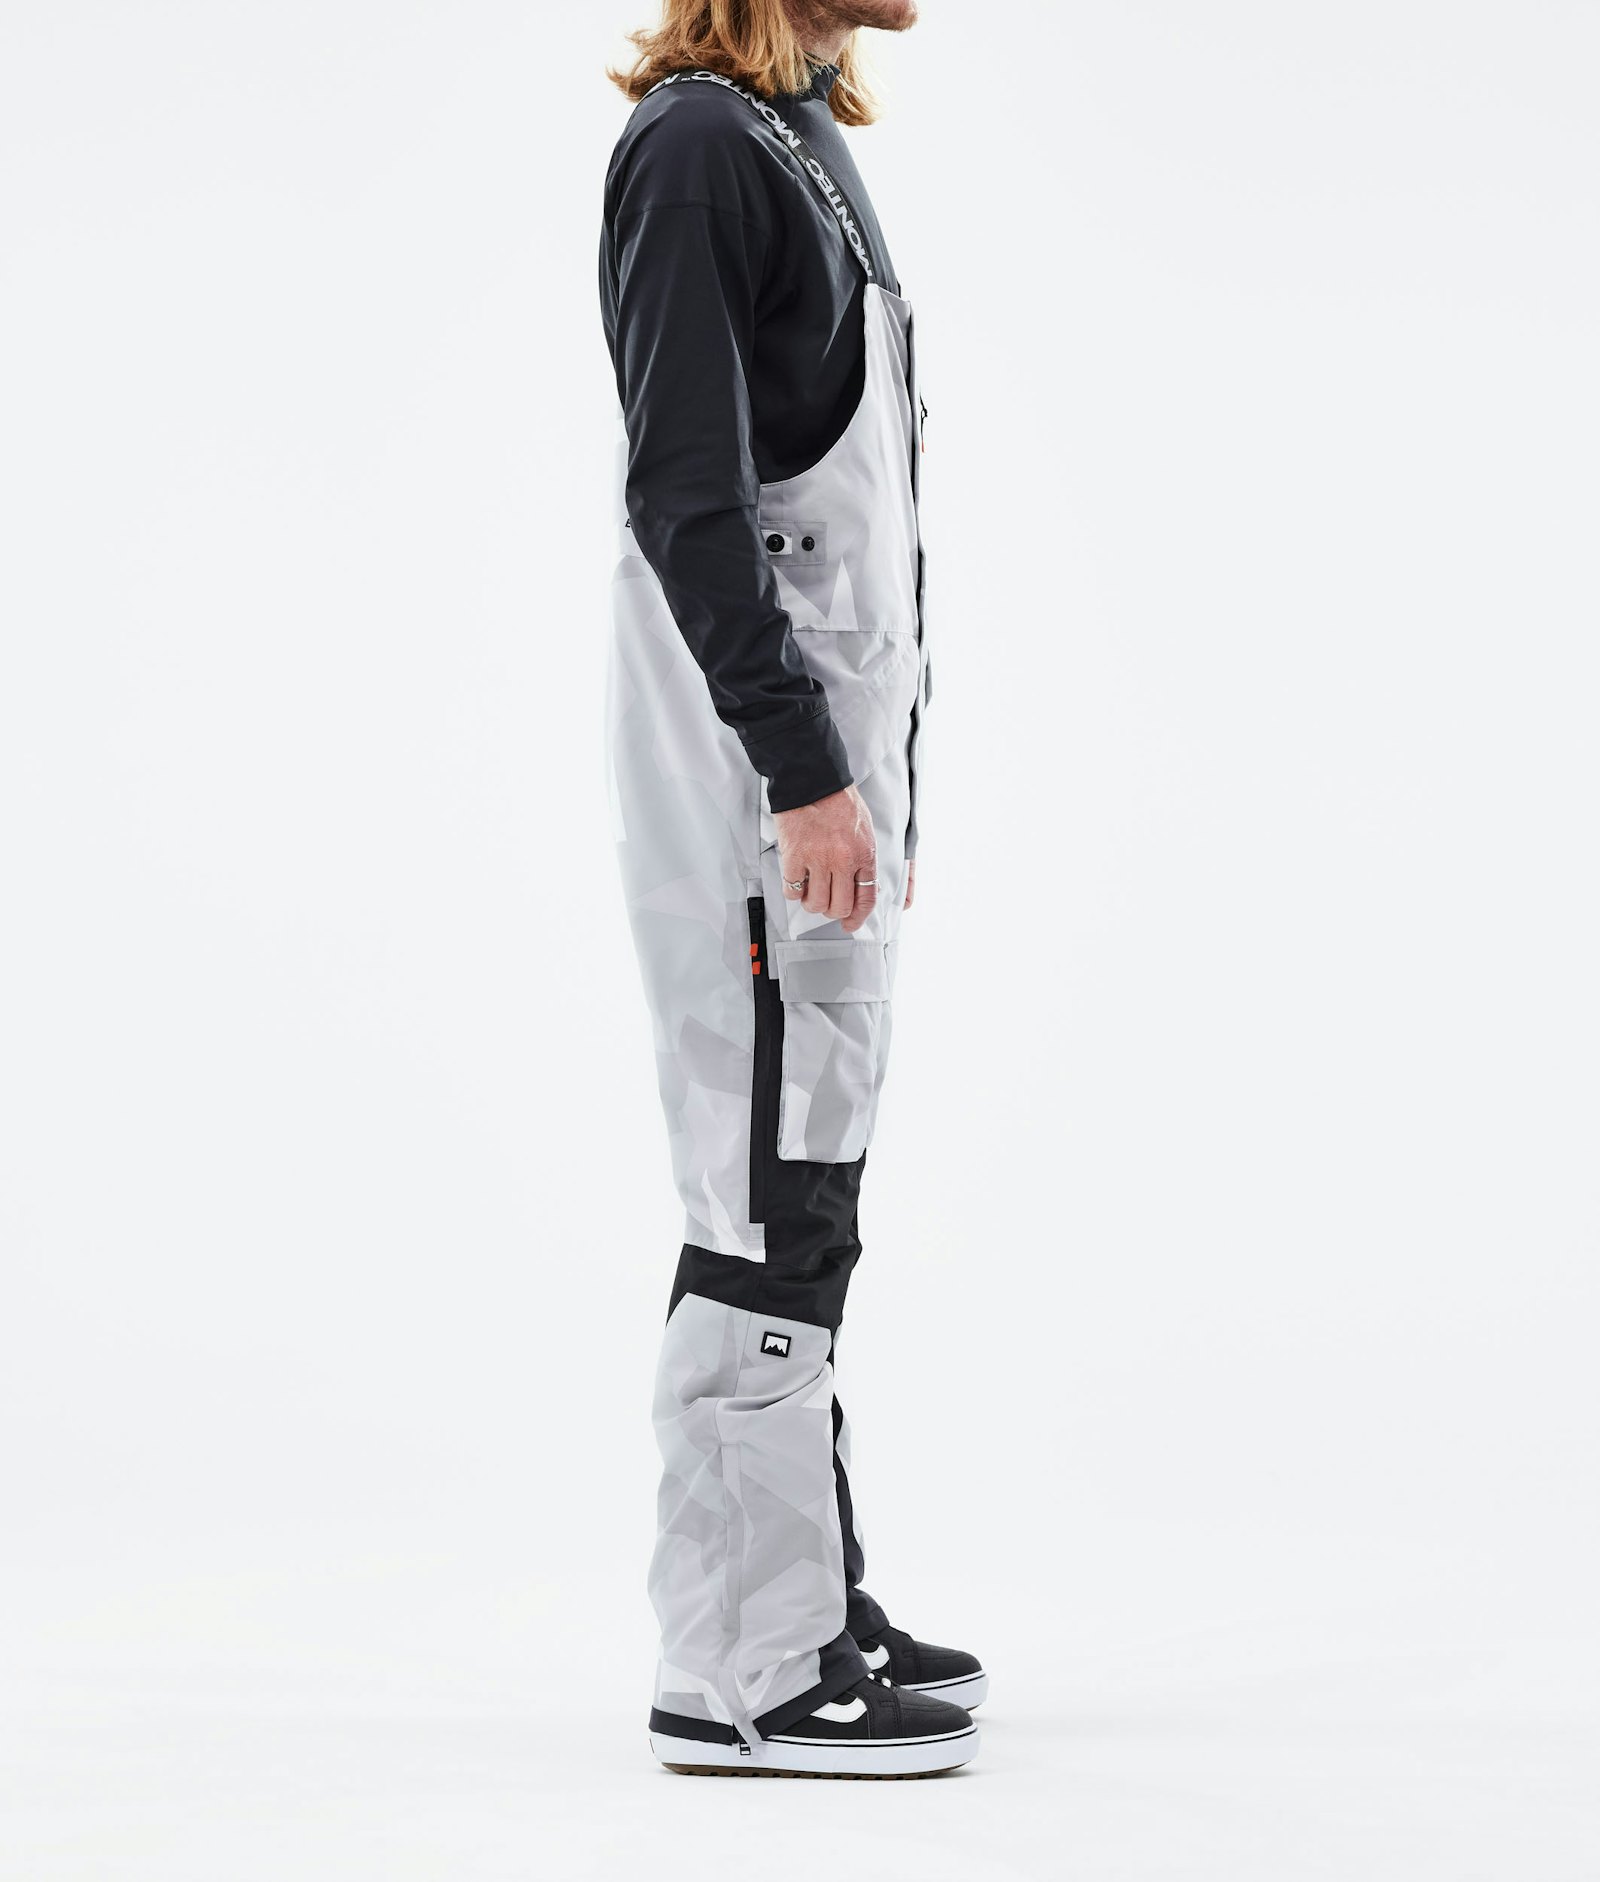 Montec Fawk 2021 Pantalones Snowboard Hombre Snow Camo/Black